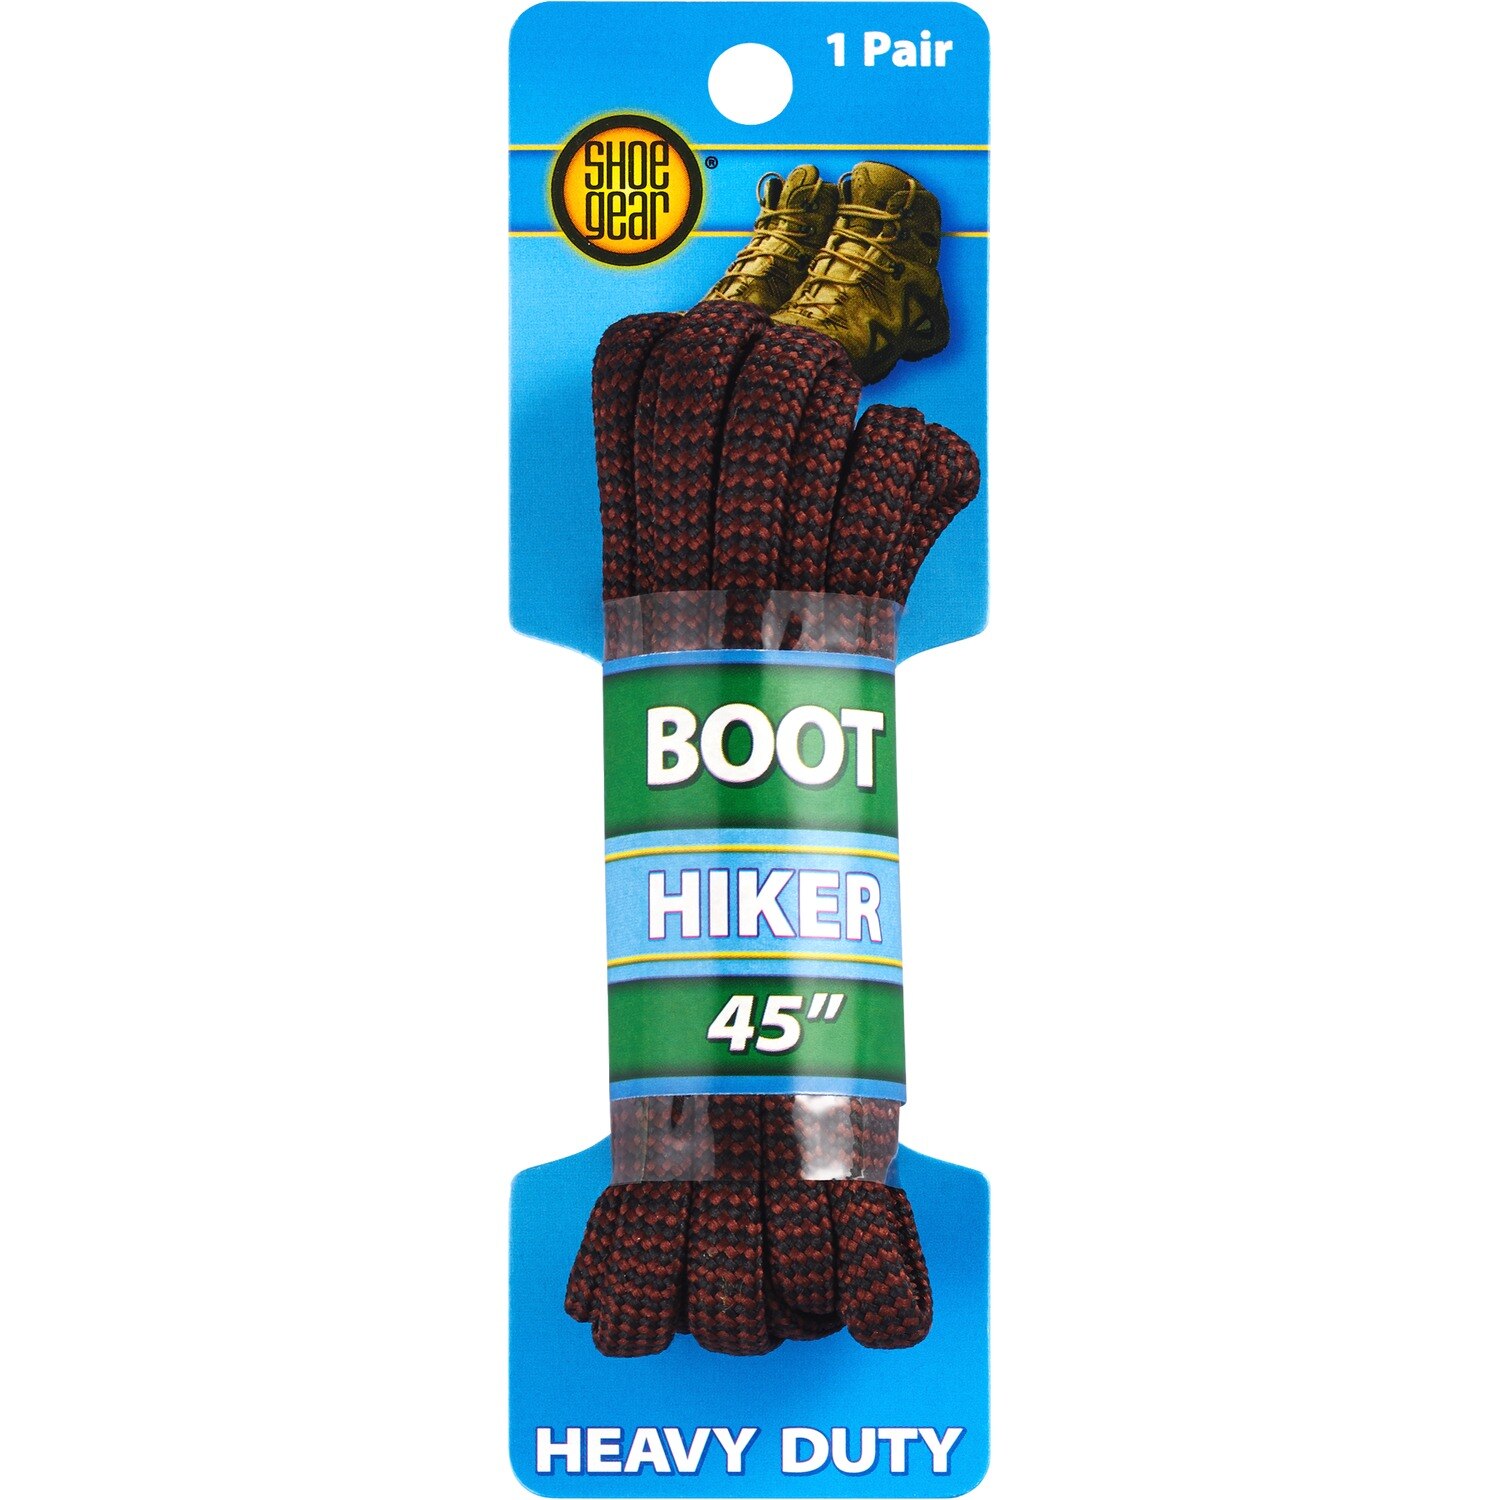 Shoe Gear Boot Hiker - Cordones de 45", marrón/negro